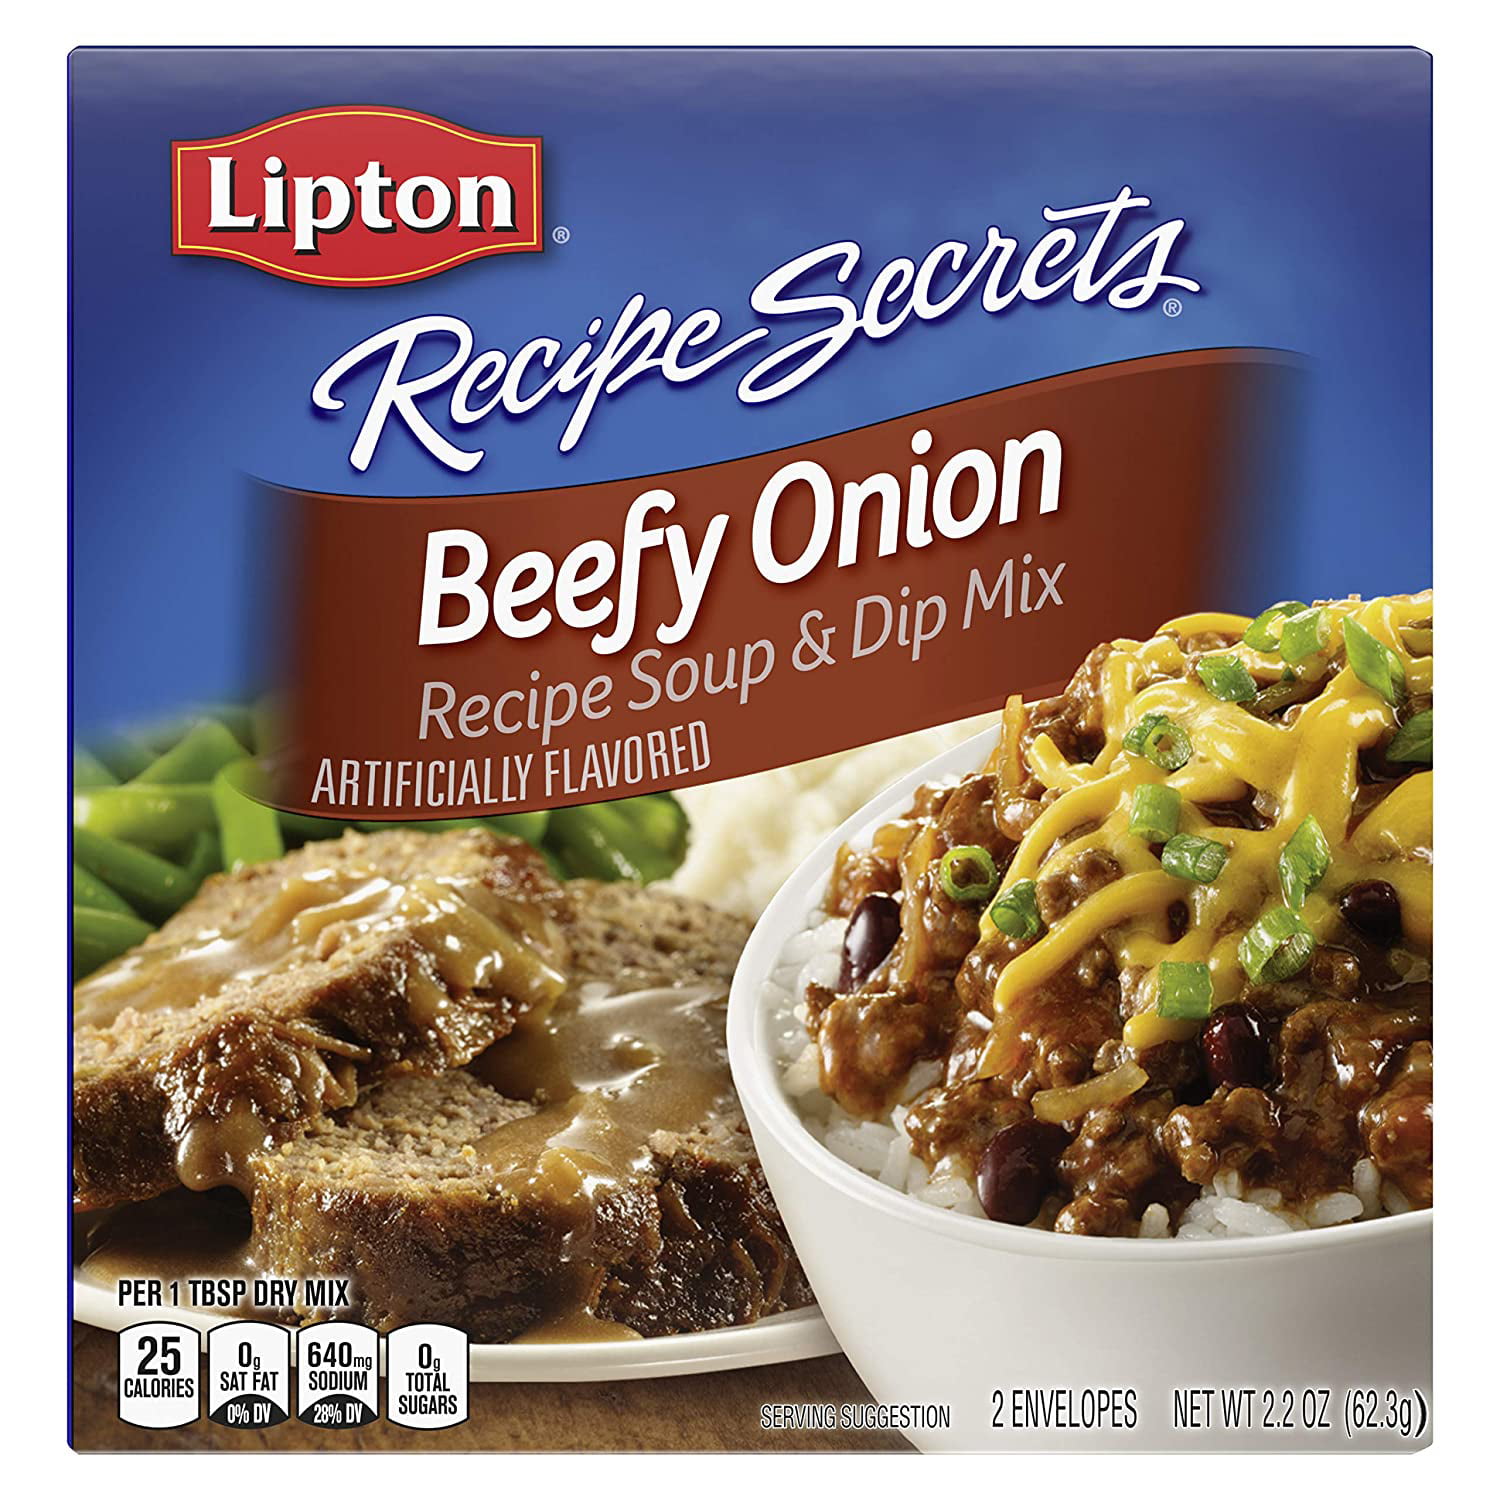 Lipton Onion Soup Mix Deserves to Make a Comeback - Eater